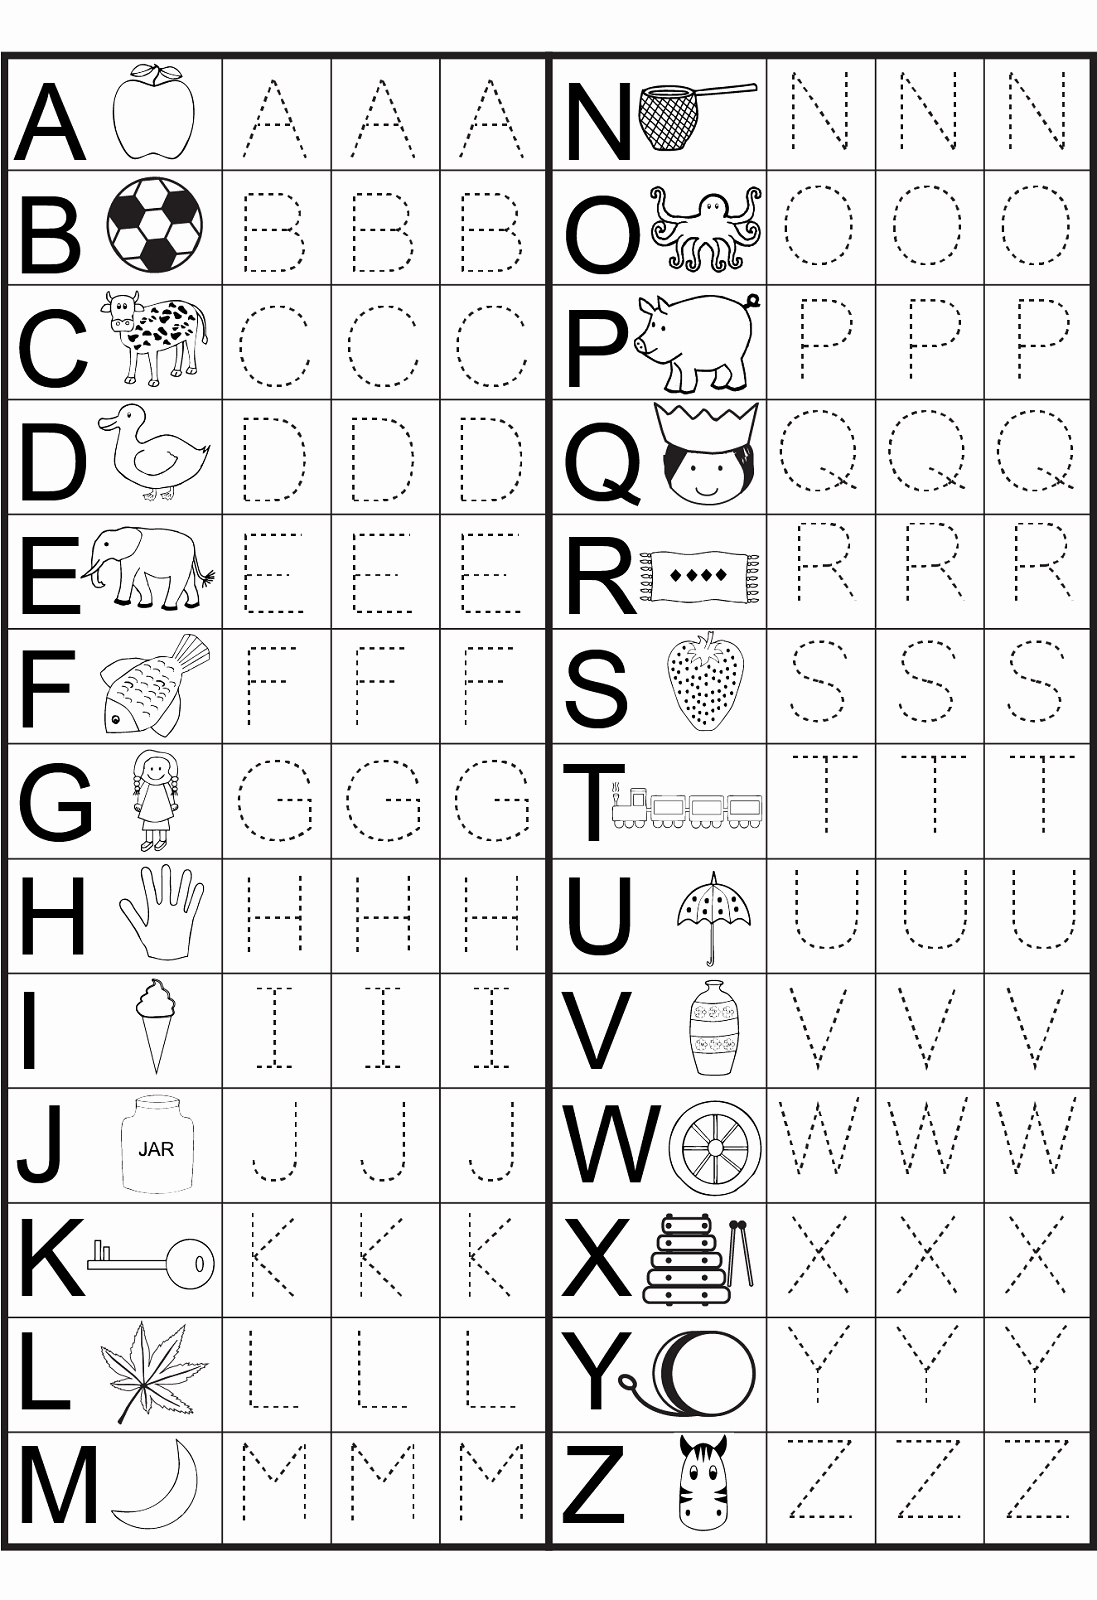 Free Printable Alphabetical order Worksheets Unique Alphabet order Worksheets for Kindergarten